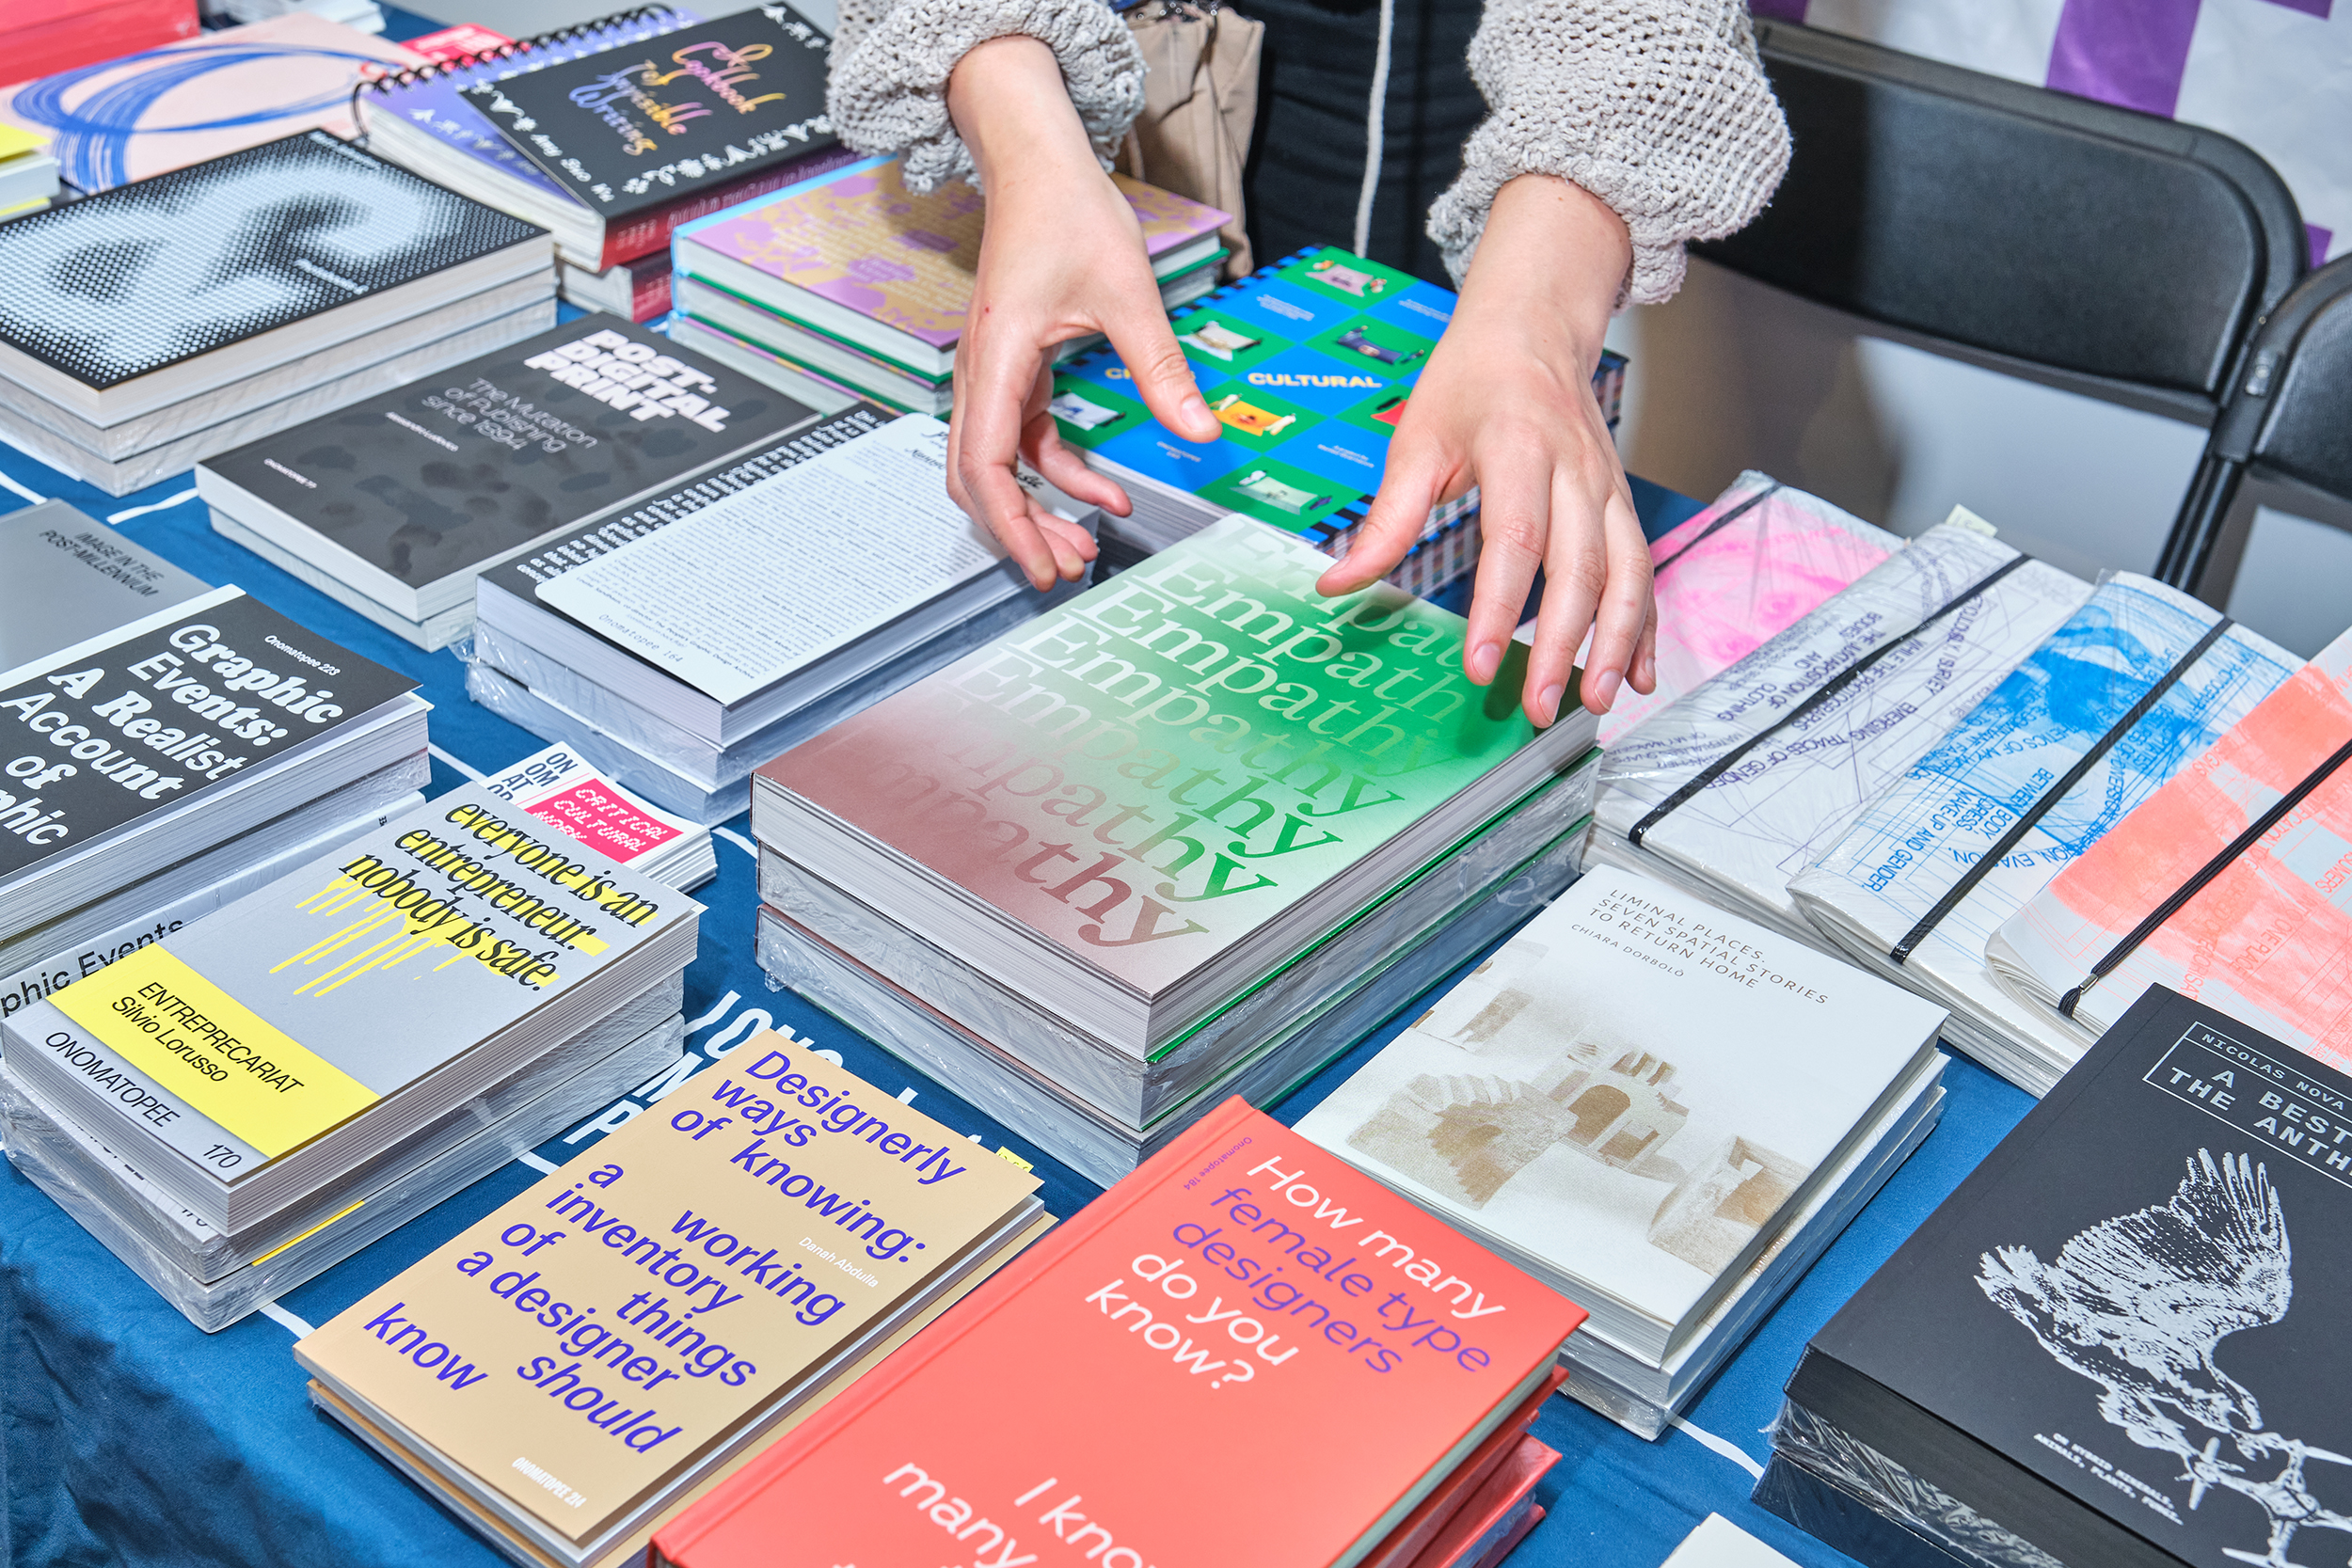 Onomatopee Projects table at the SF Art Book Fair, July 2022. Photo: Jenna Garrett